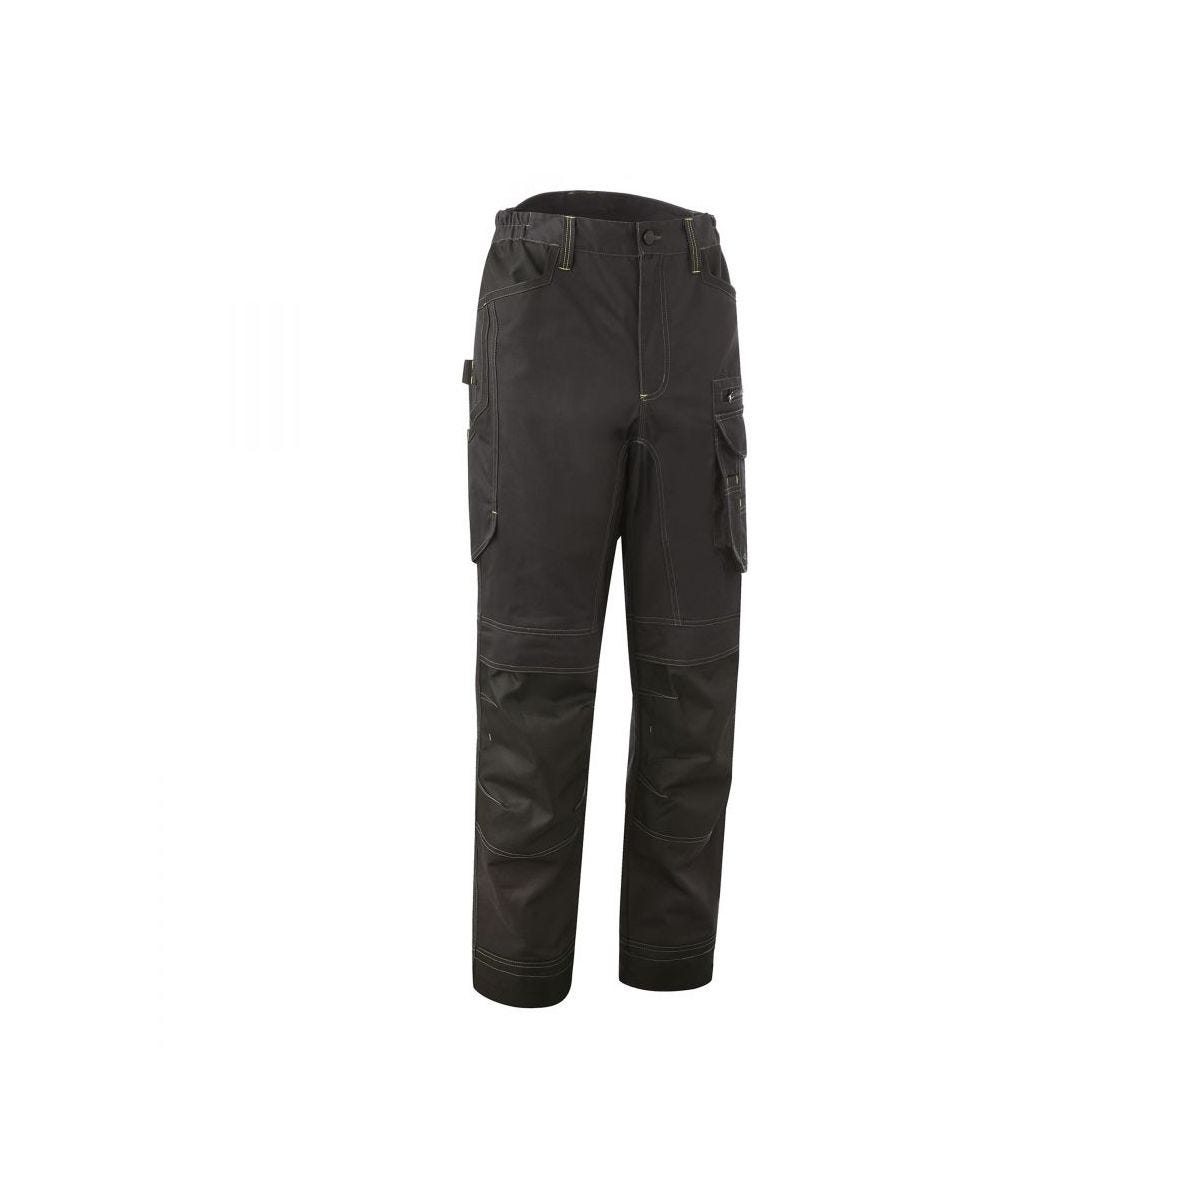 Pantalon BARVA Anthracite-Lime - Coverguard - Taille XL 0